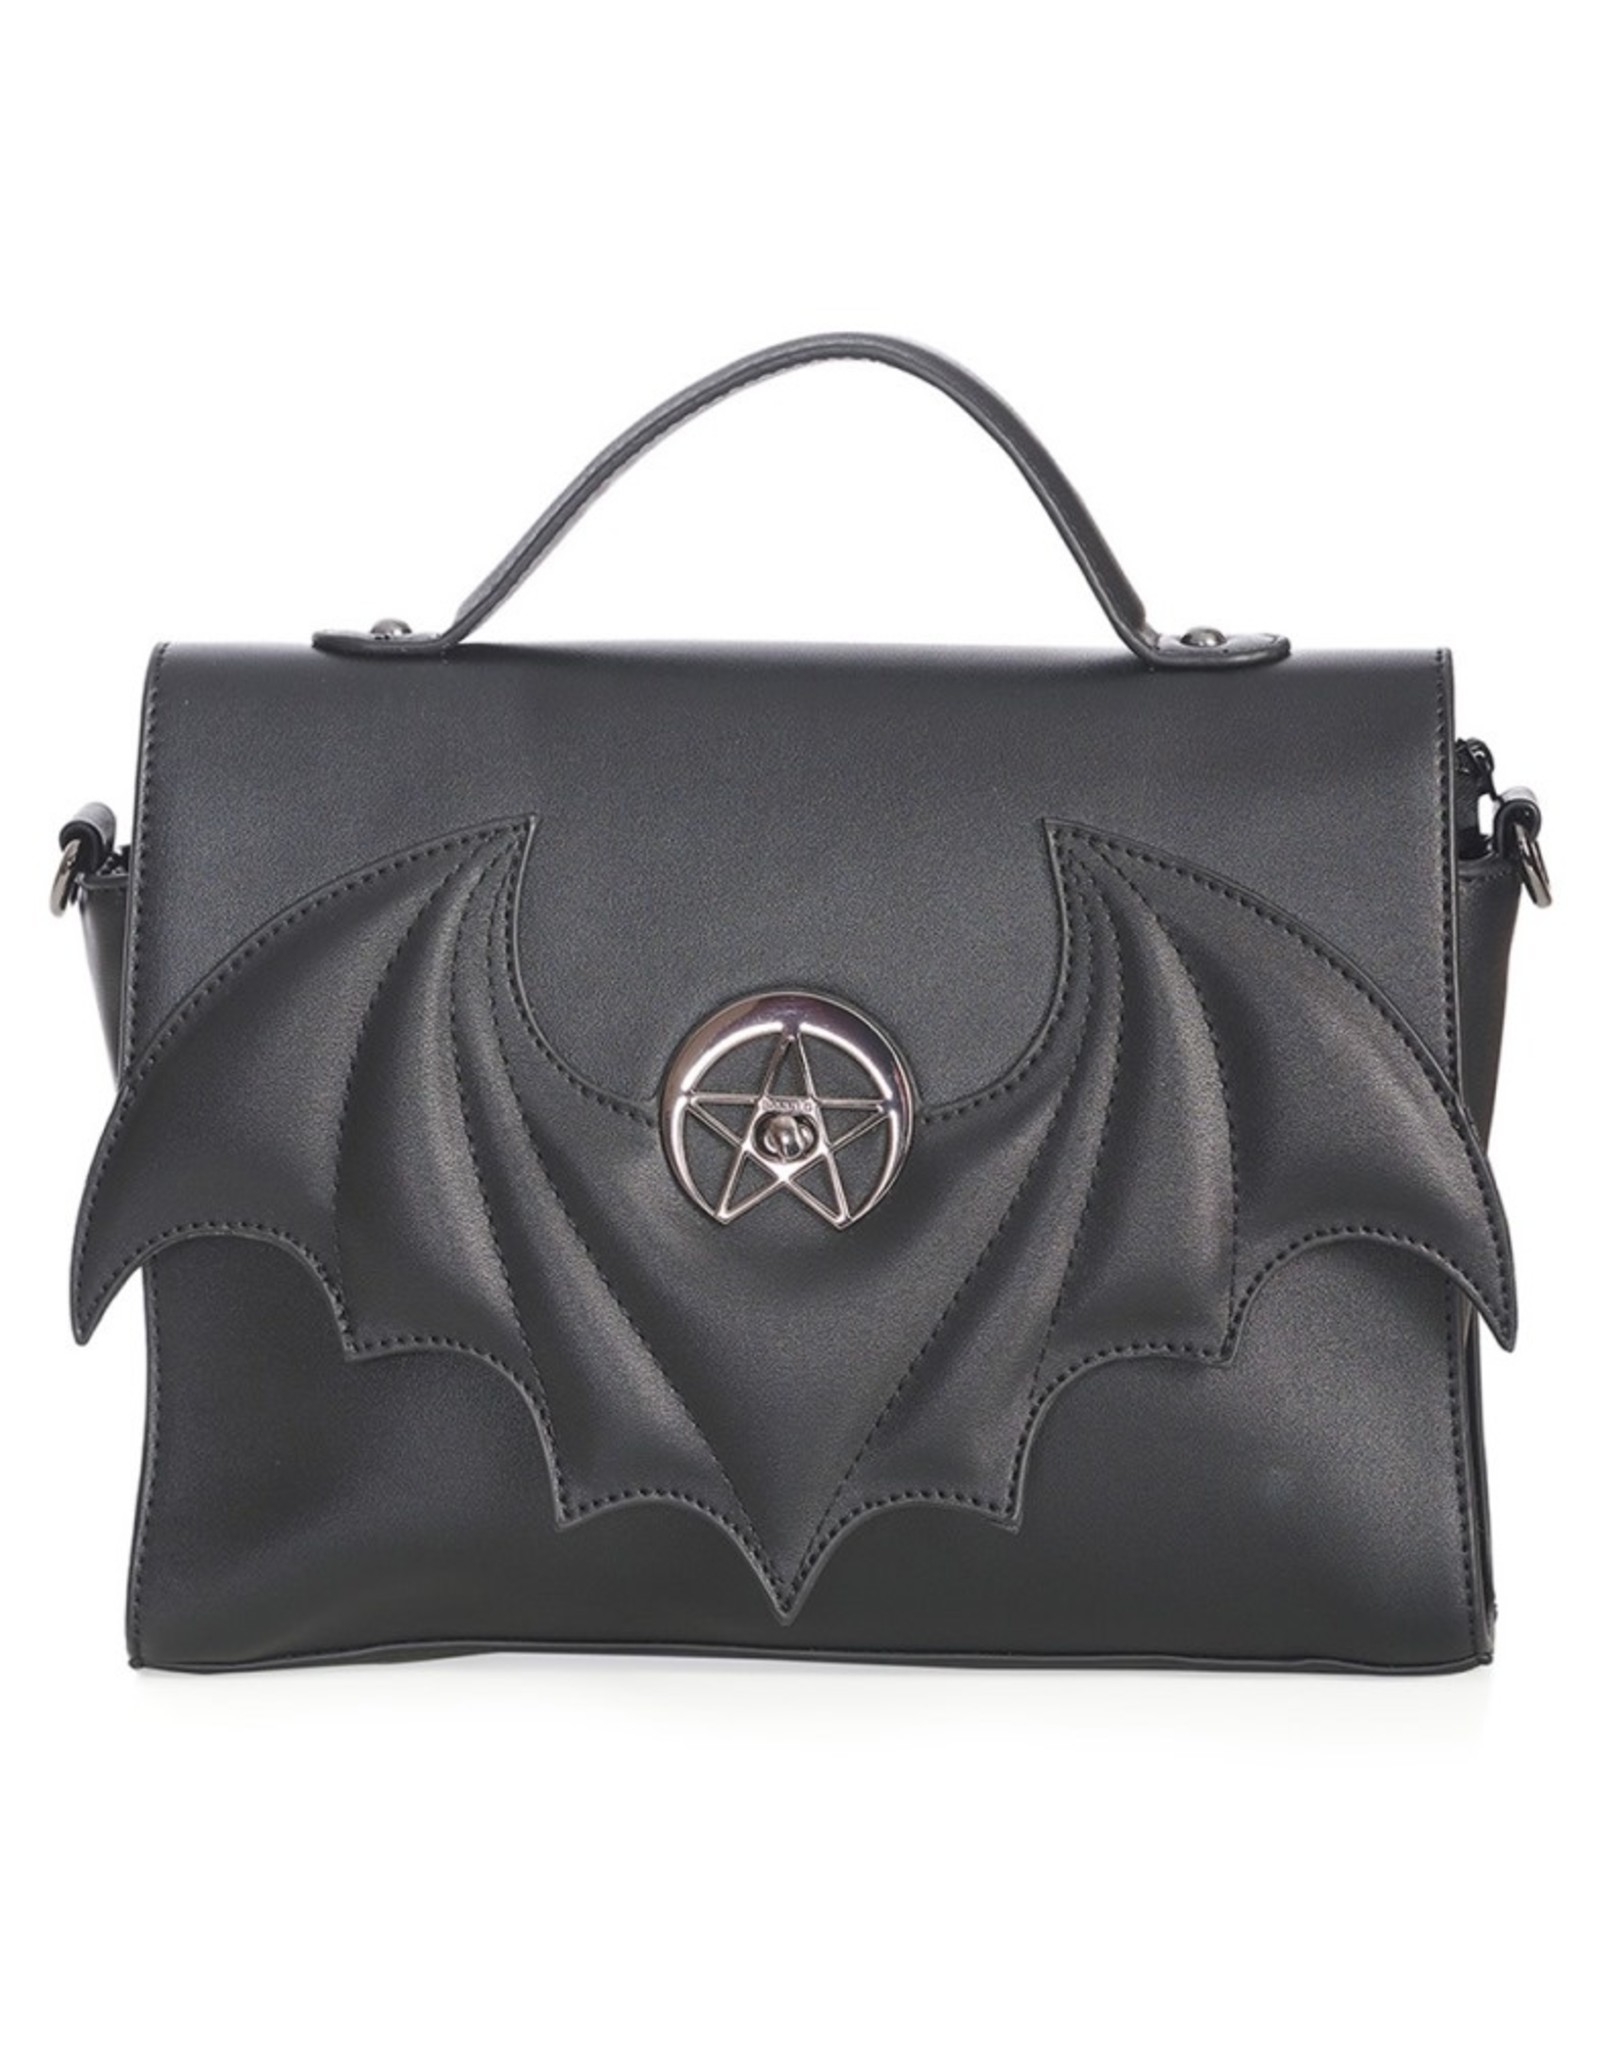 Banned Gothic bags Steampunk bags - Banned Dreamcatcher Bat Handbag